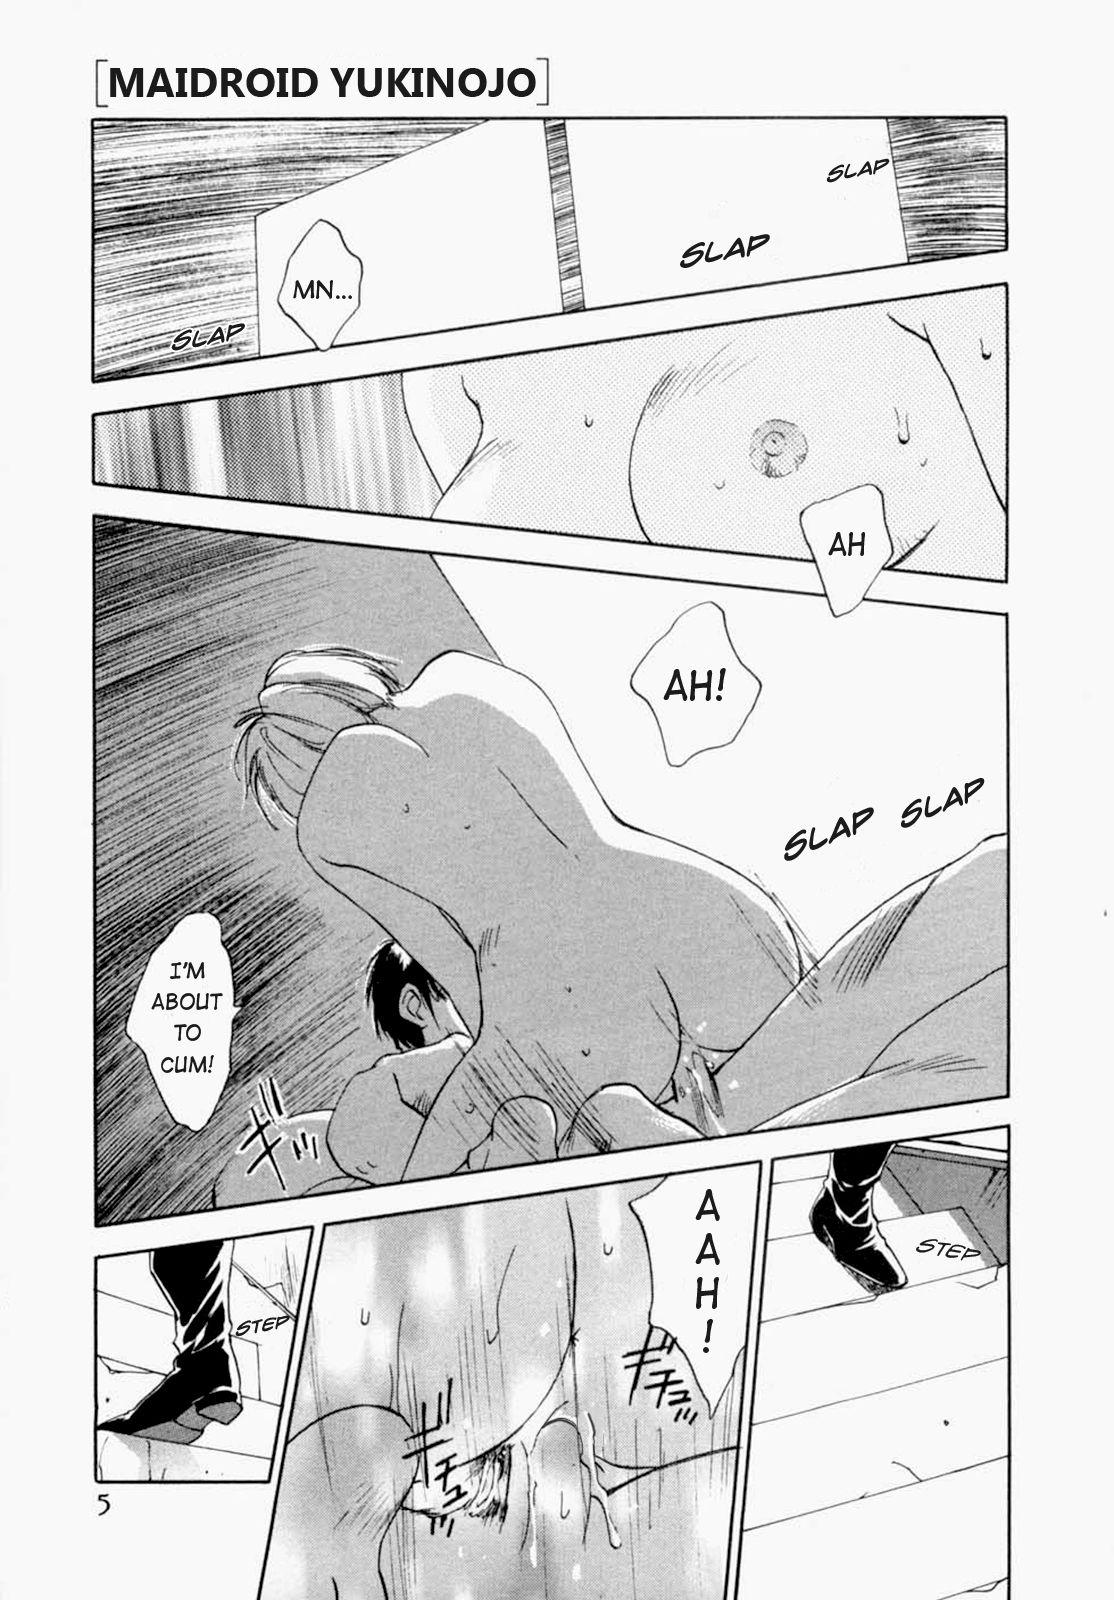 [Juichi Iogi] Maidroid Yukinojo Vol 1, Story 1-4 (Manga Sunday Comics) | [GynoidNeko] [English] [Decensored] 6